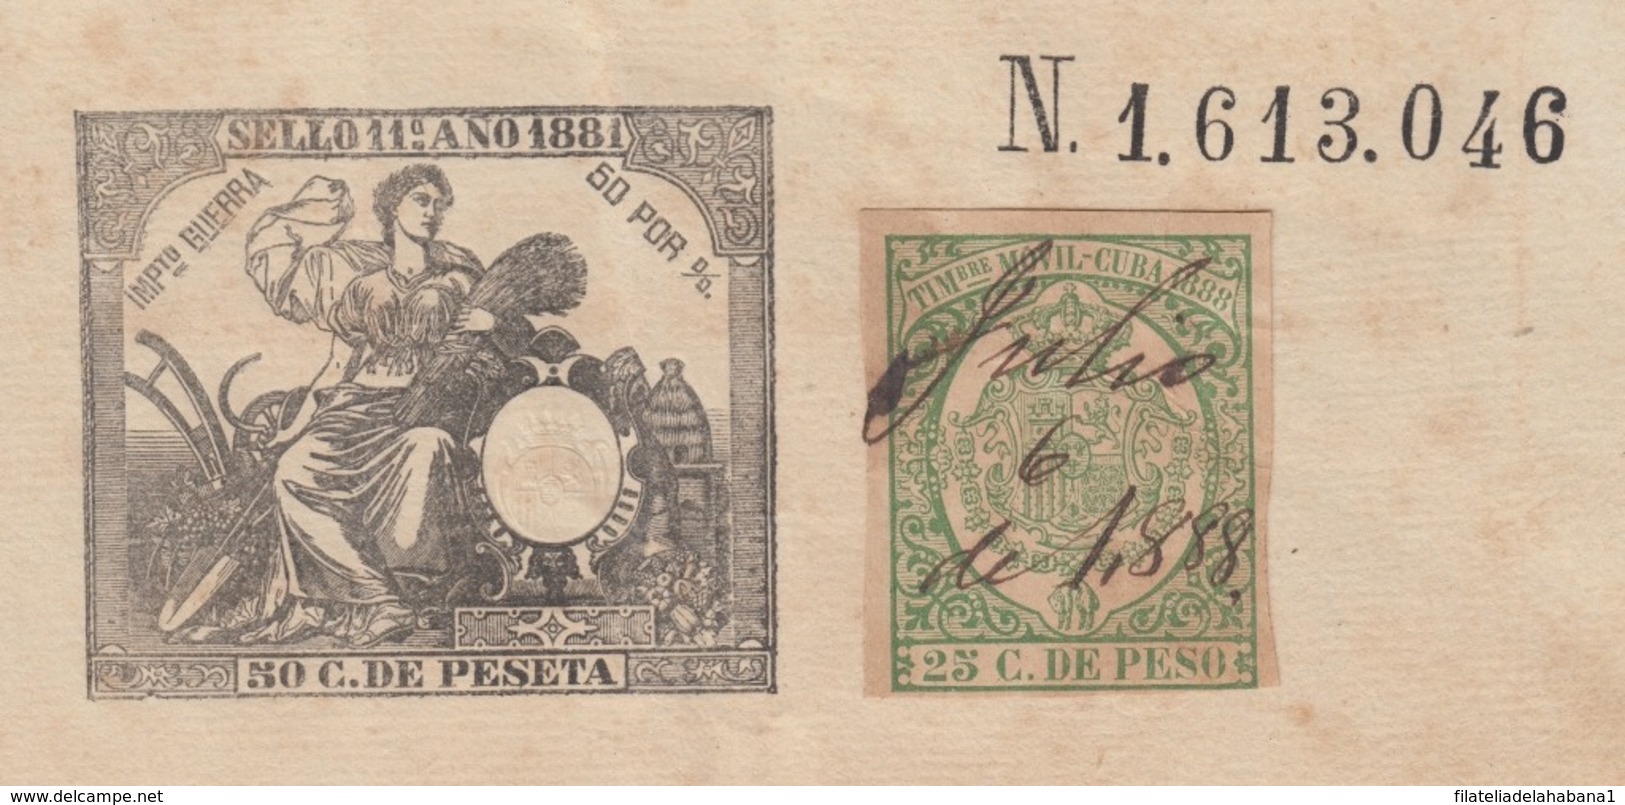 TMO-51 CUBA (LG1515) SPAIN ANT. REVENUE 1881 SEALLED PAPER + TIMBRE MOVIL 1886. - Segnatasse